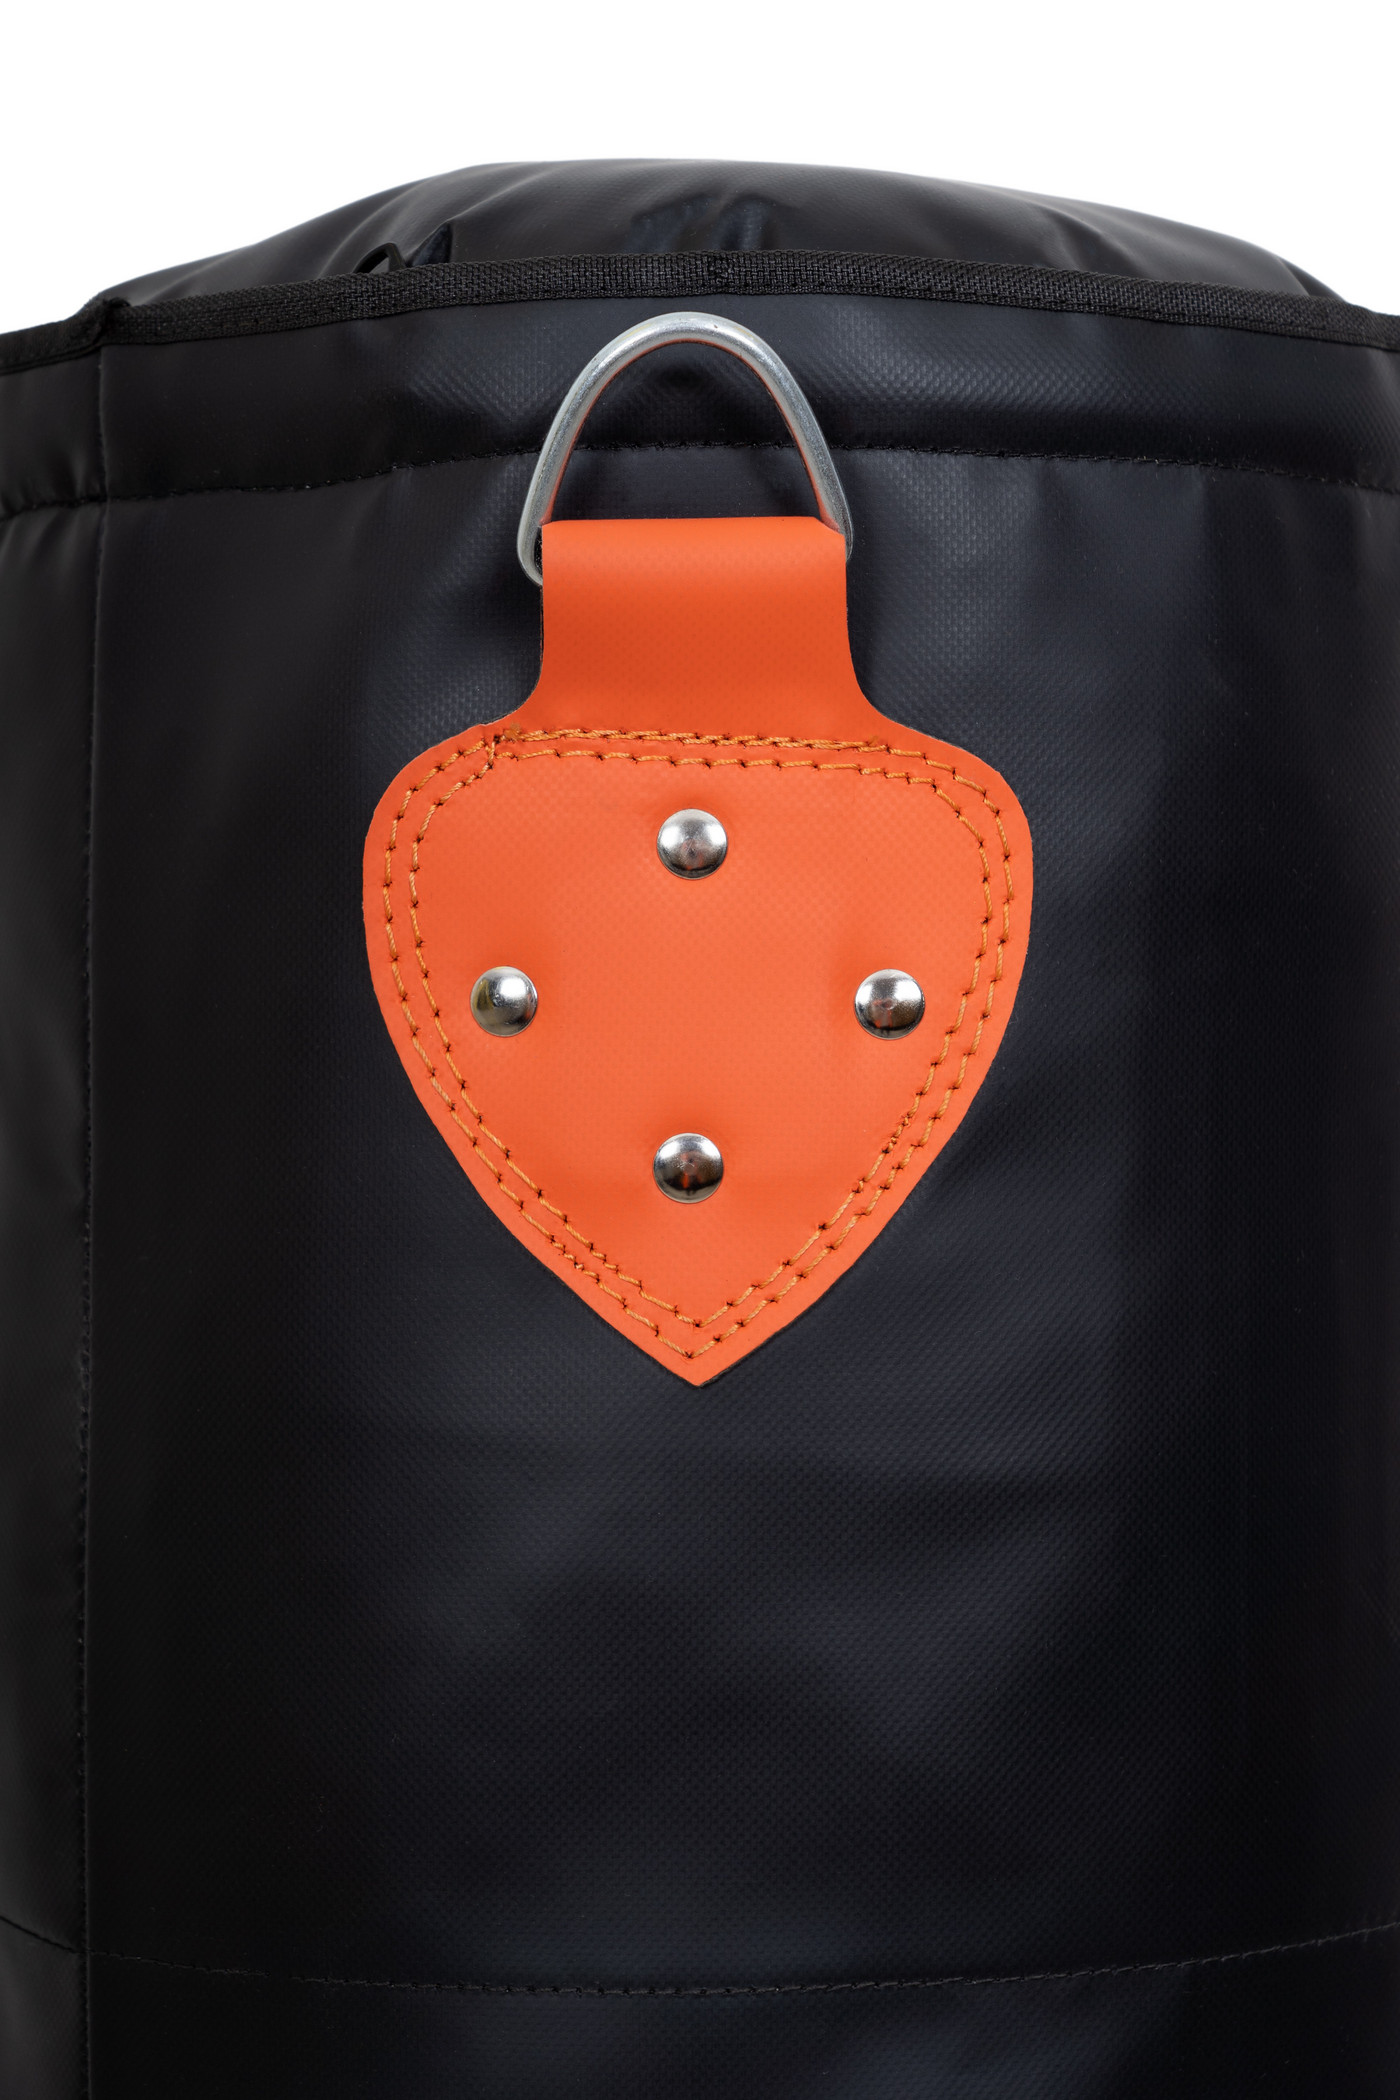 Standard 4 Panel Punch Bag (34cm)